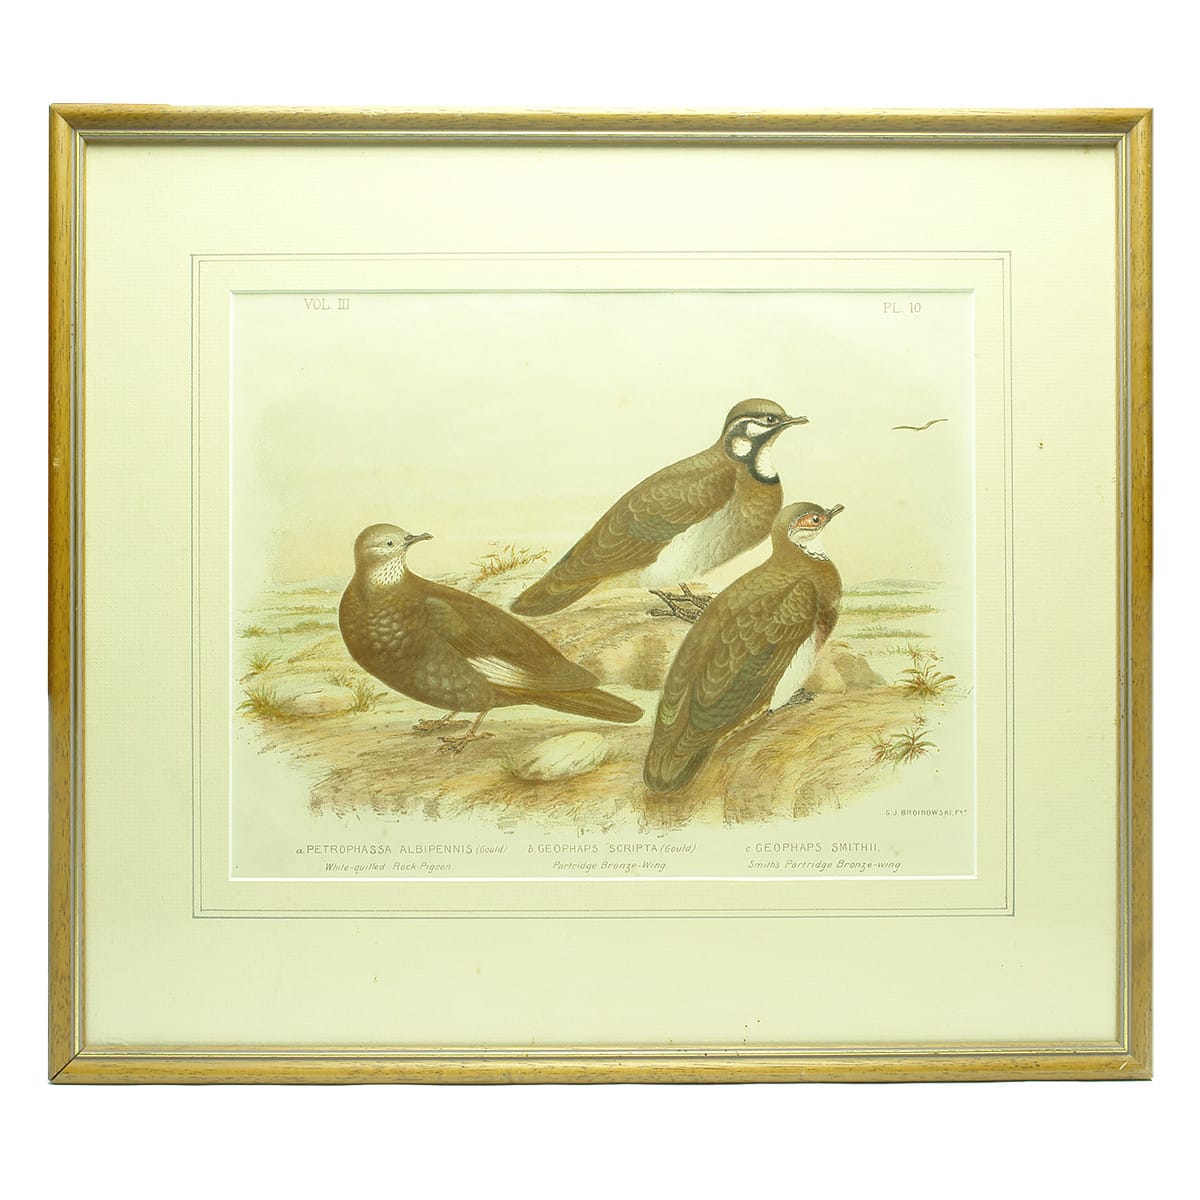 Lithograph. White-quilled Rock-Pigeon, Partridge Bronze-Wing and Smith's Partridge Bronze-wing. Gracius Joseph Broinowski, Bird's of Australia, 1889.